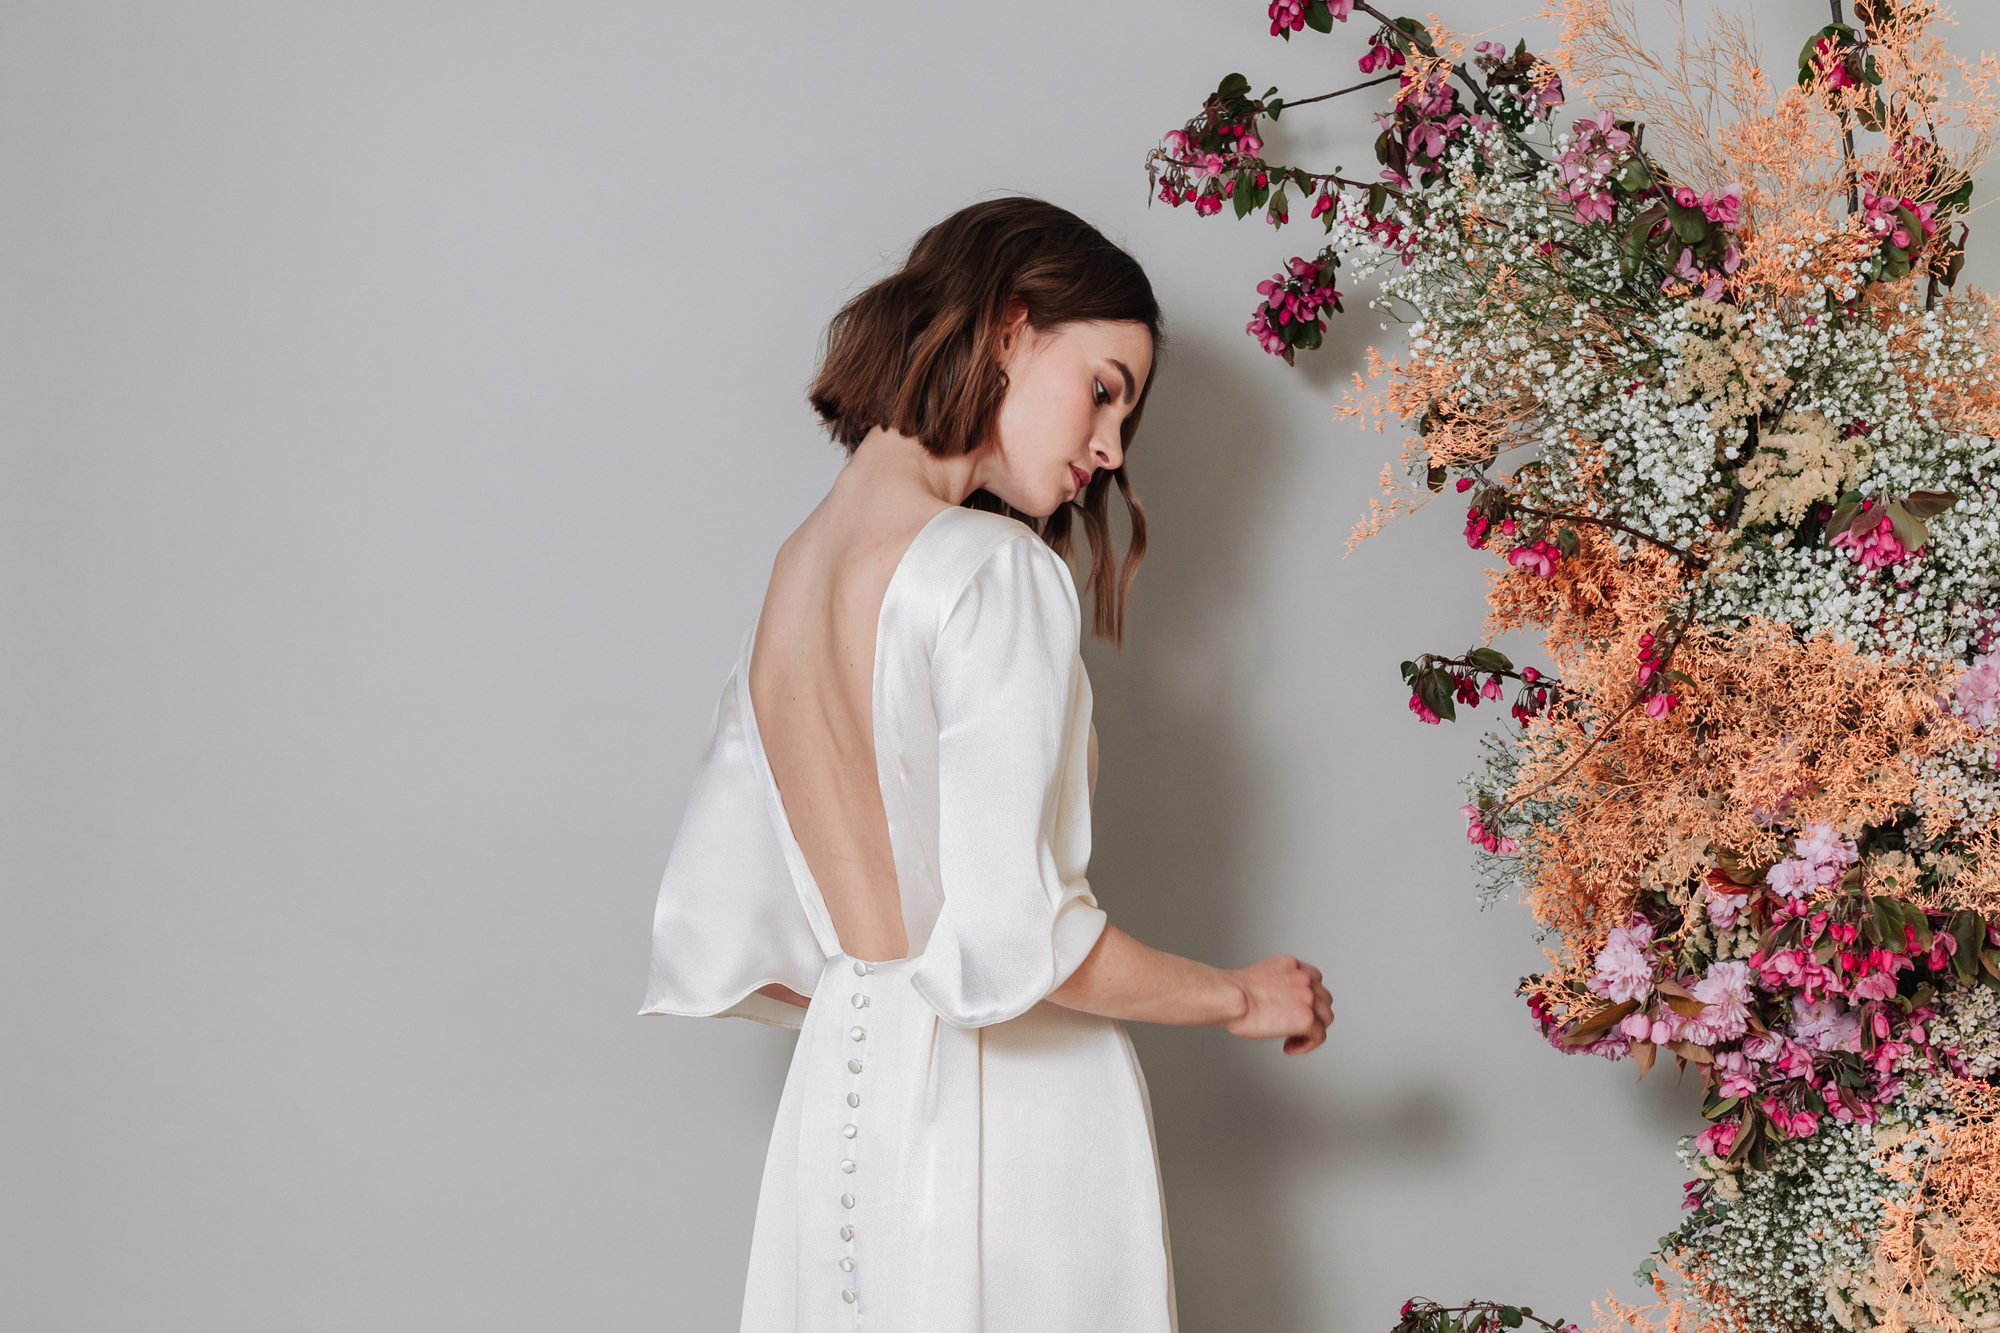 kate beaumont 2019 sheffield wedding dress designer